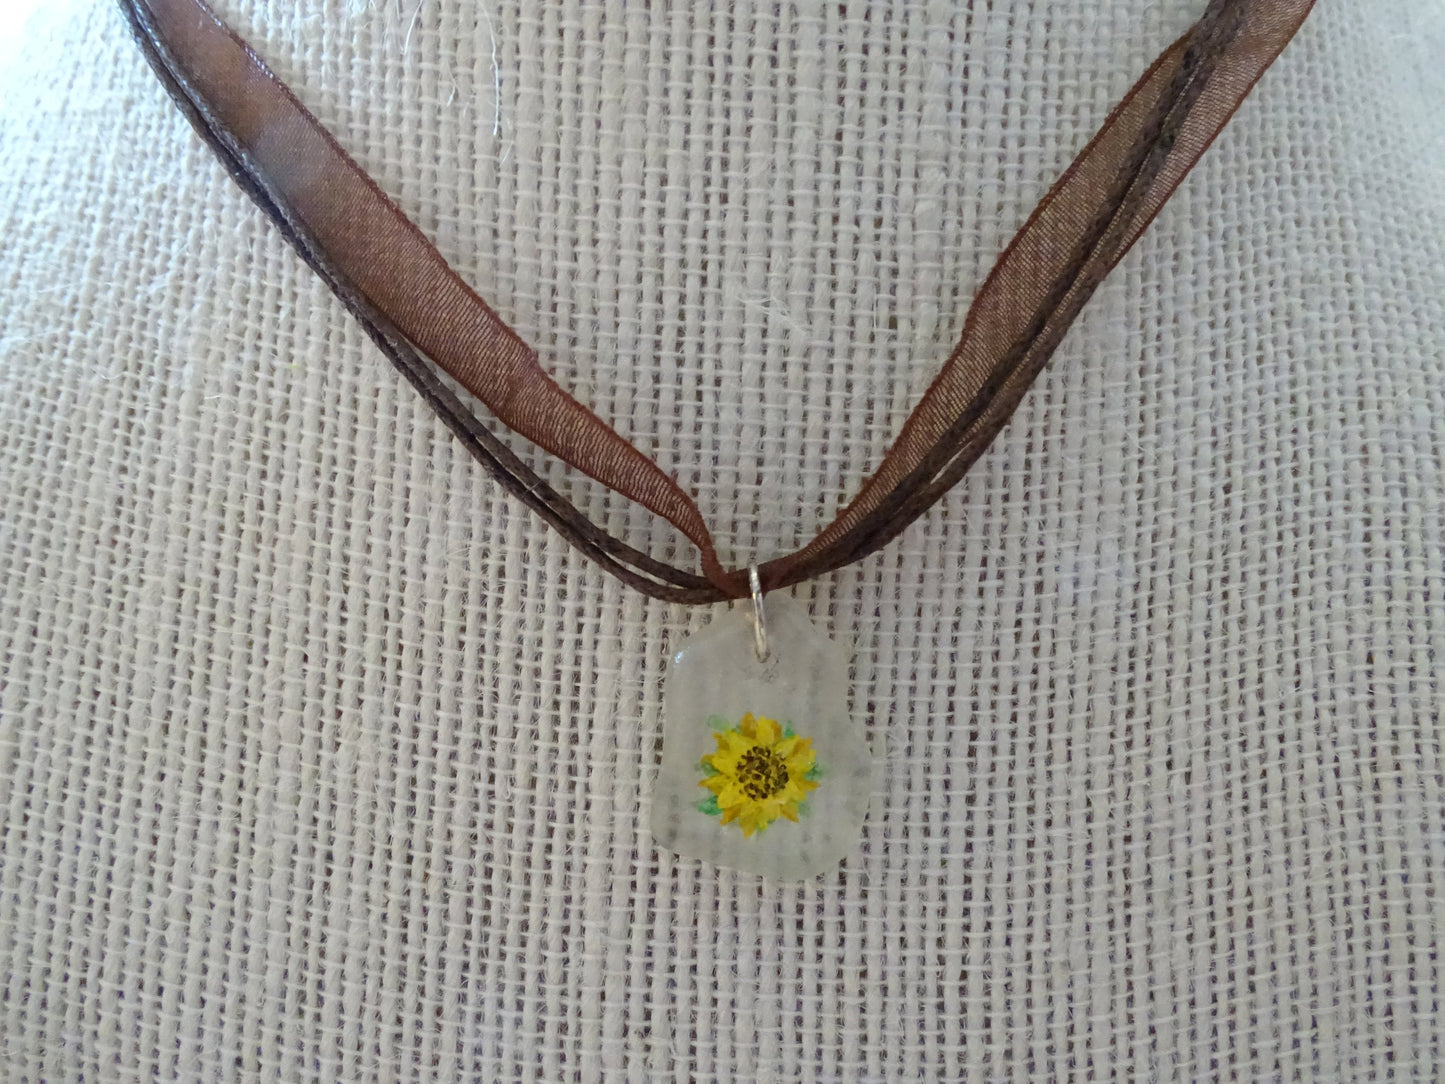 Sunflower painted on sea glass pendant